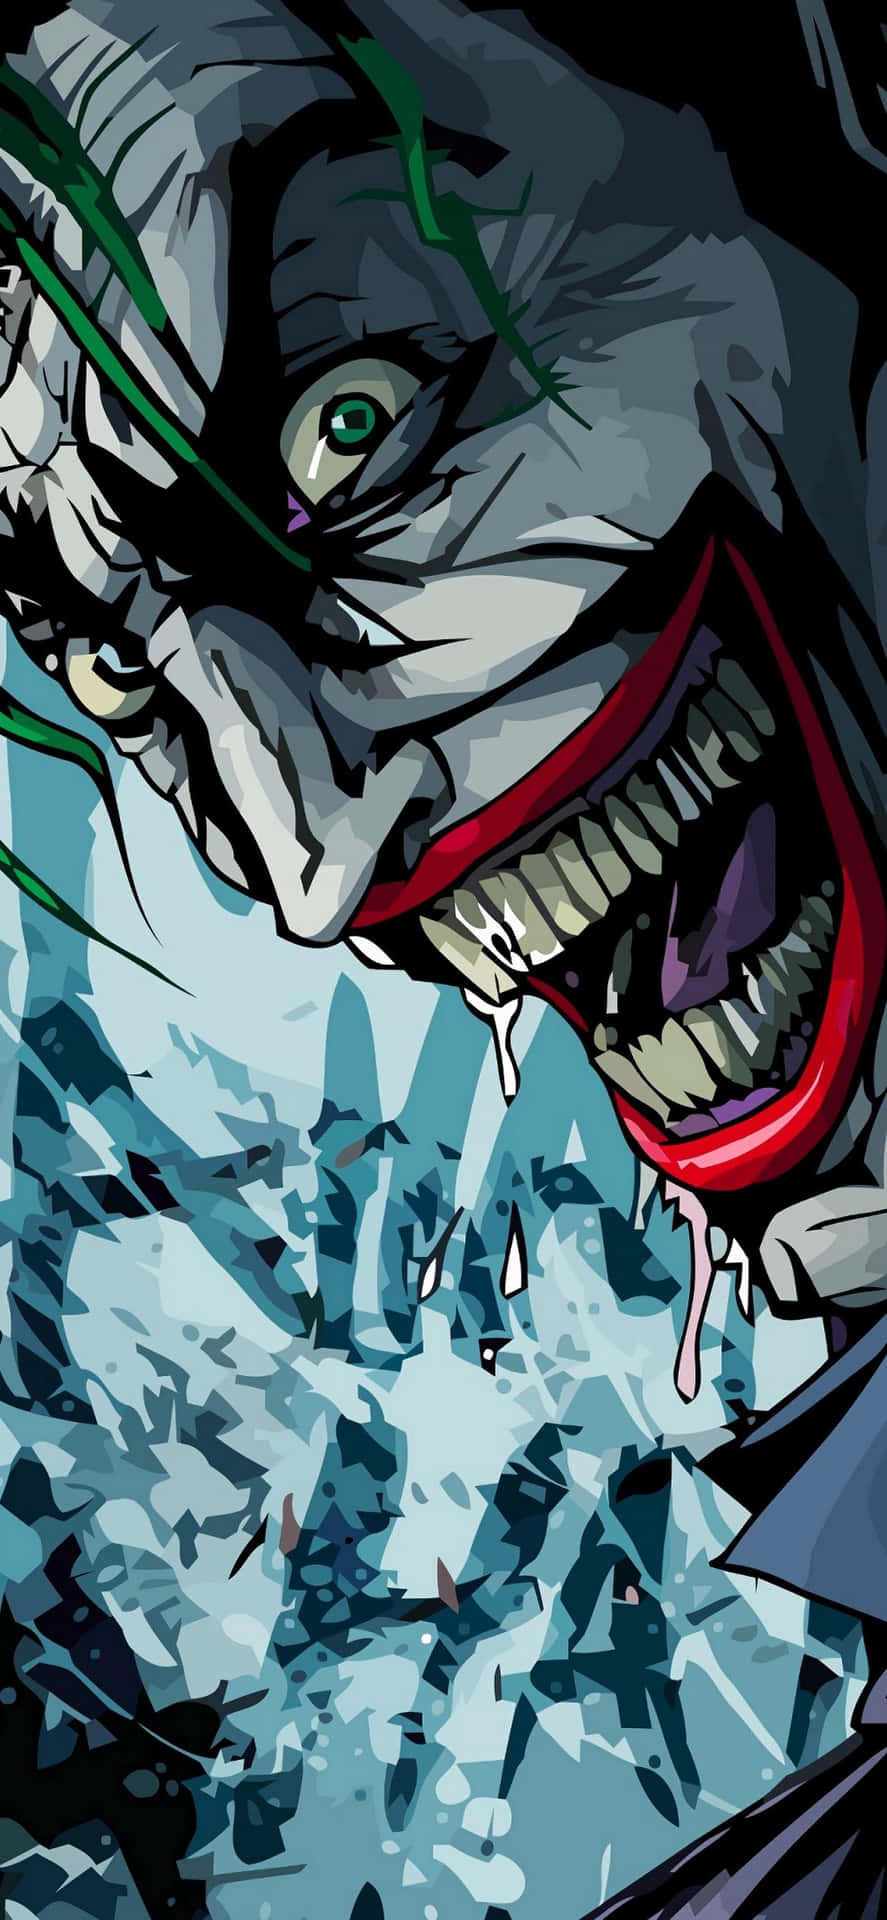 Joker Laughing Maniacally Background